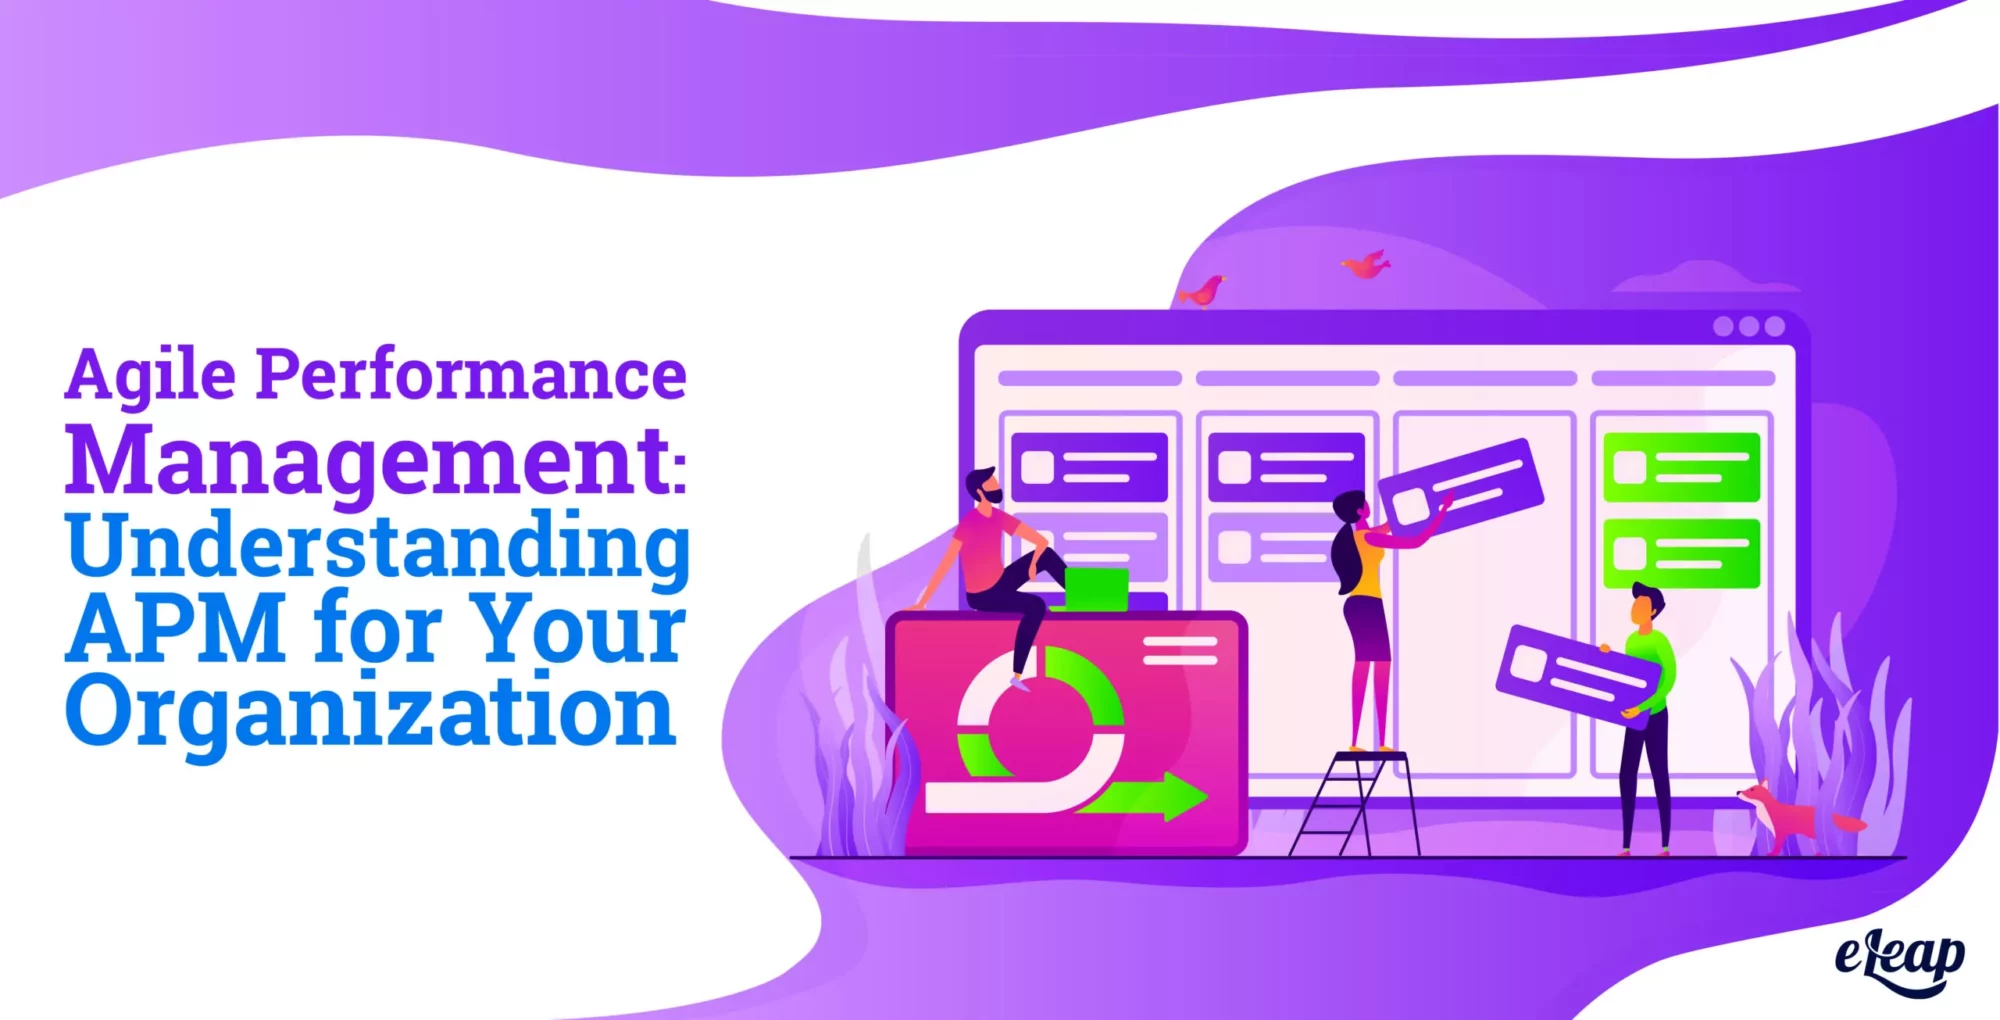 Agile Performance Management: Understanding APM for Your Organization